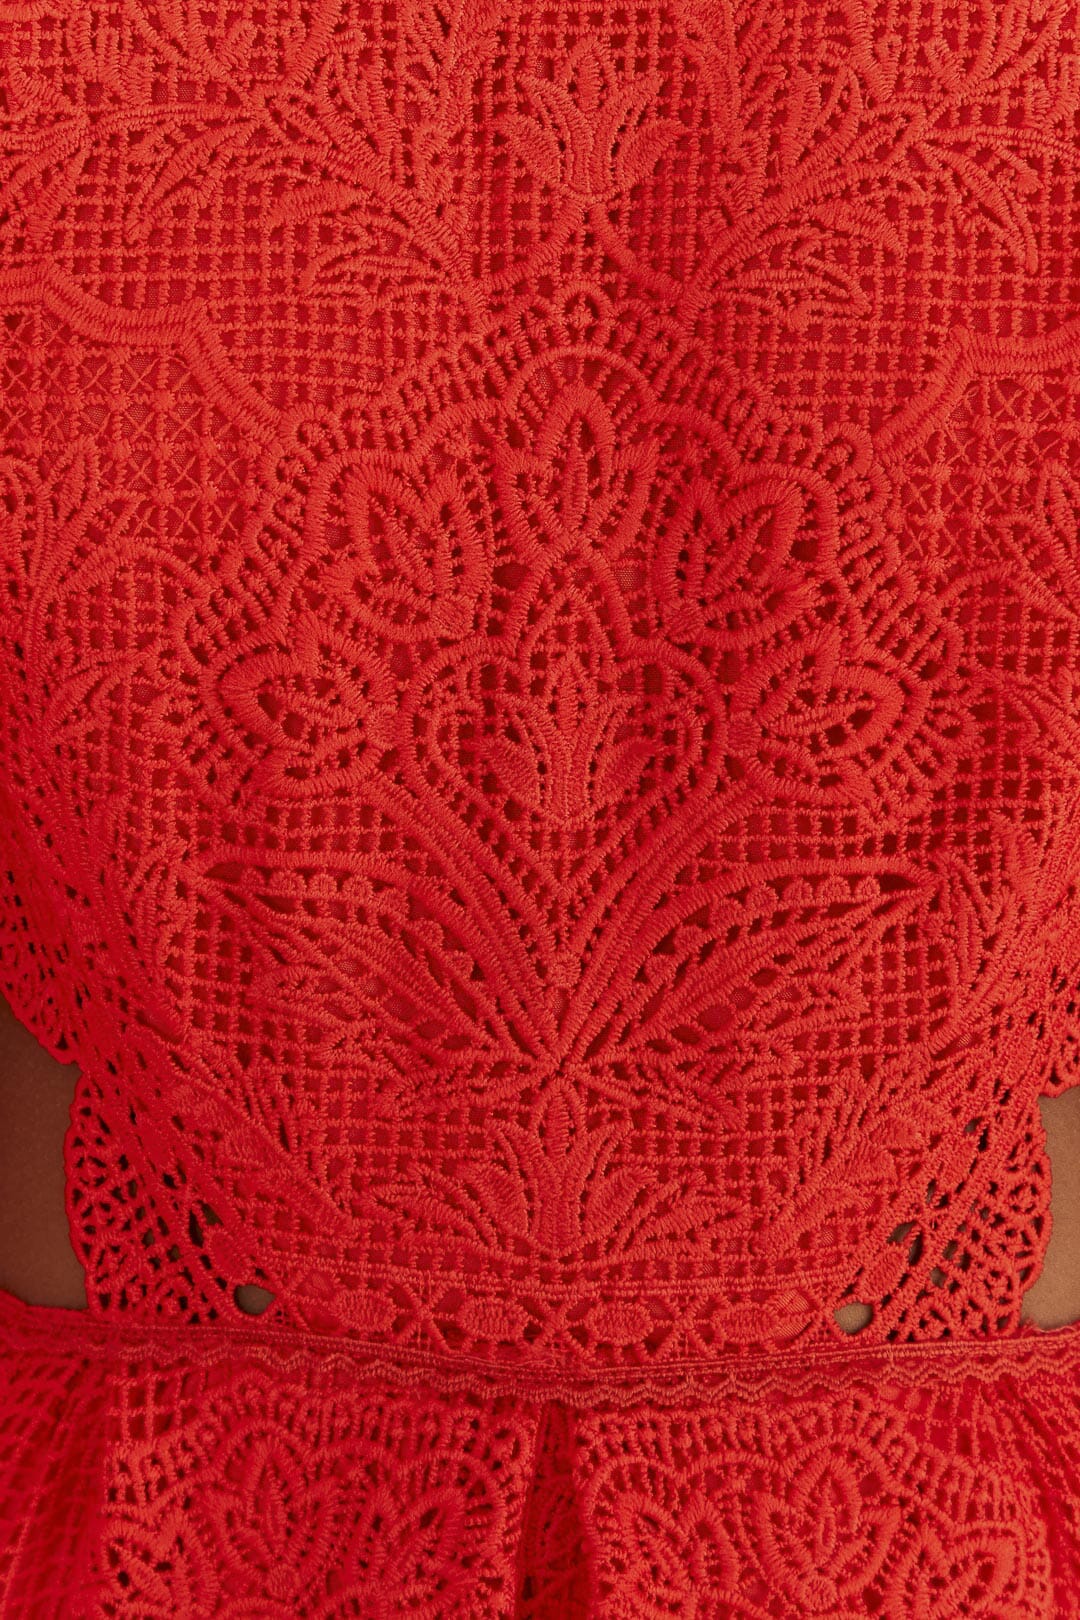 Red Guipure Cut Out Midi Dress